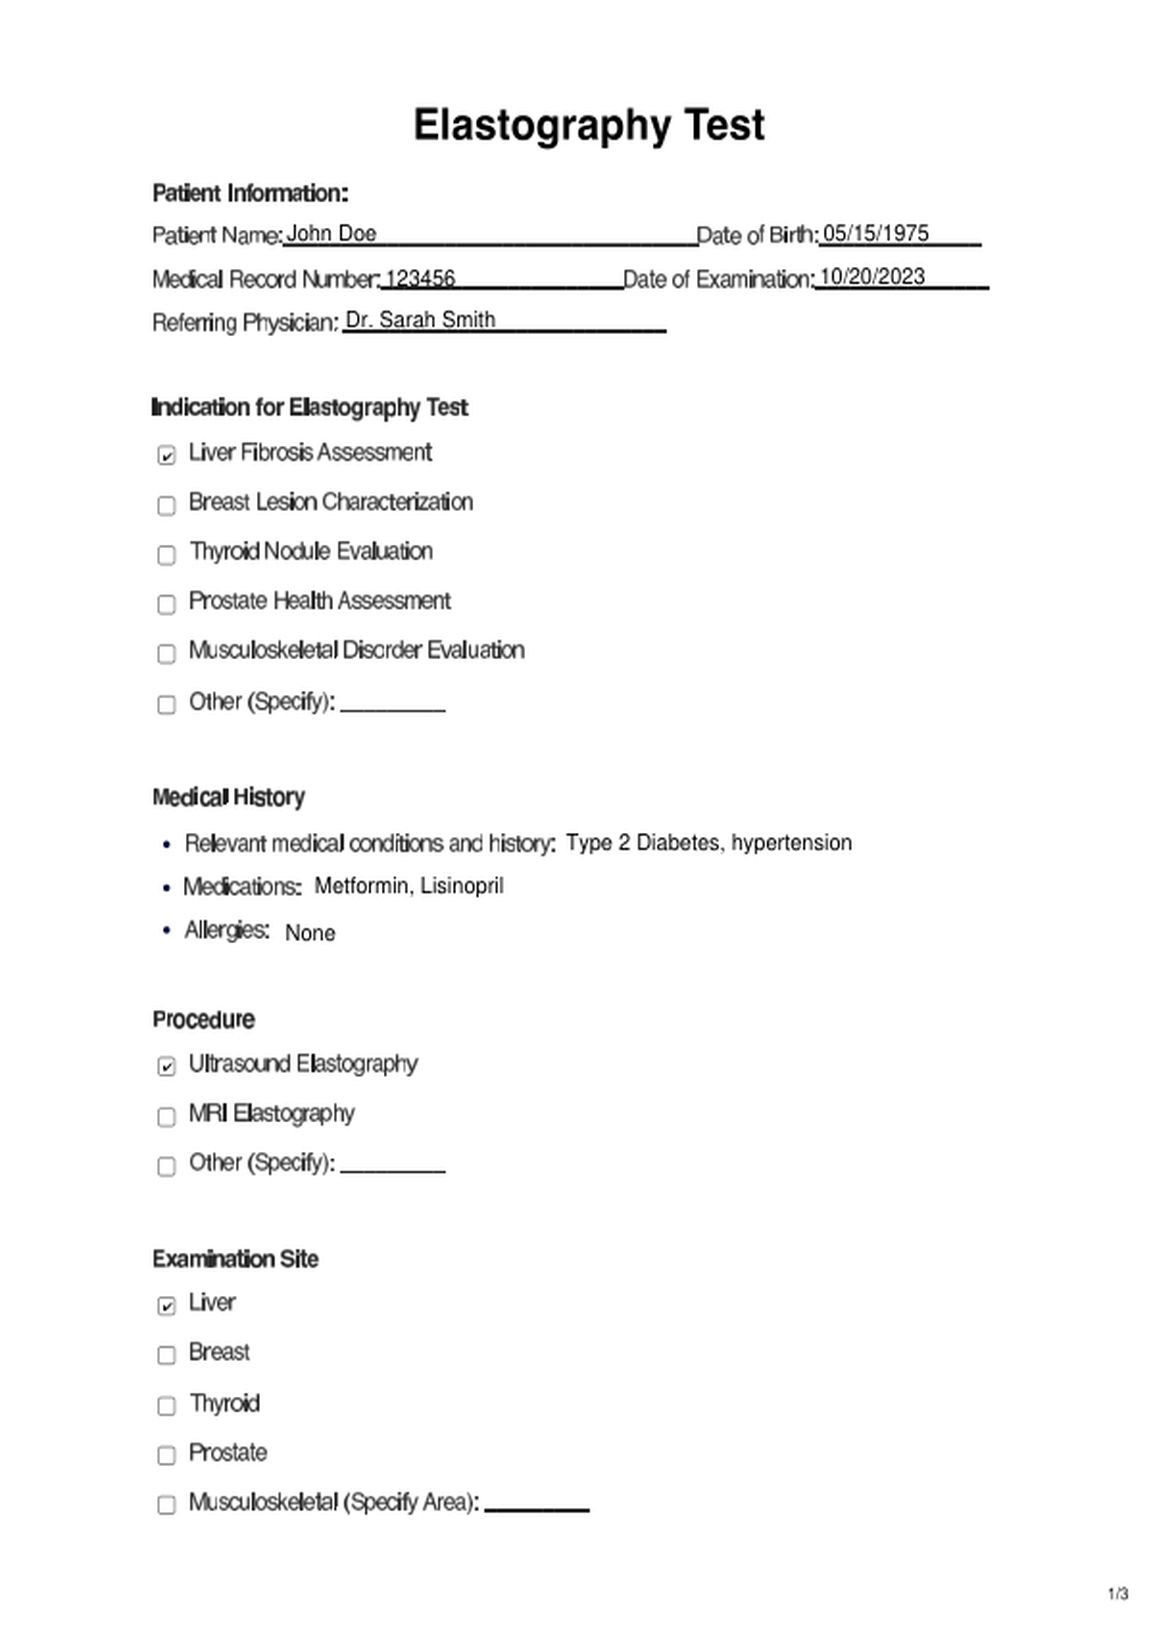 Elastography PDF Example